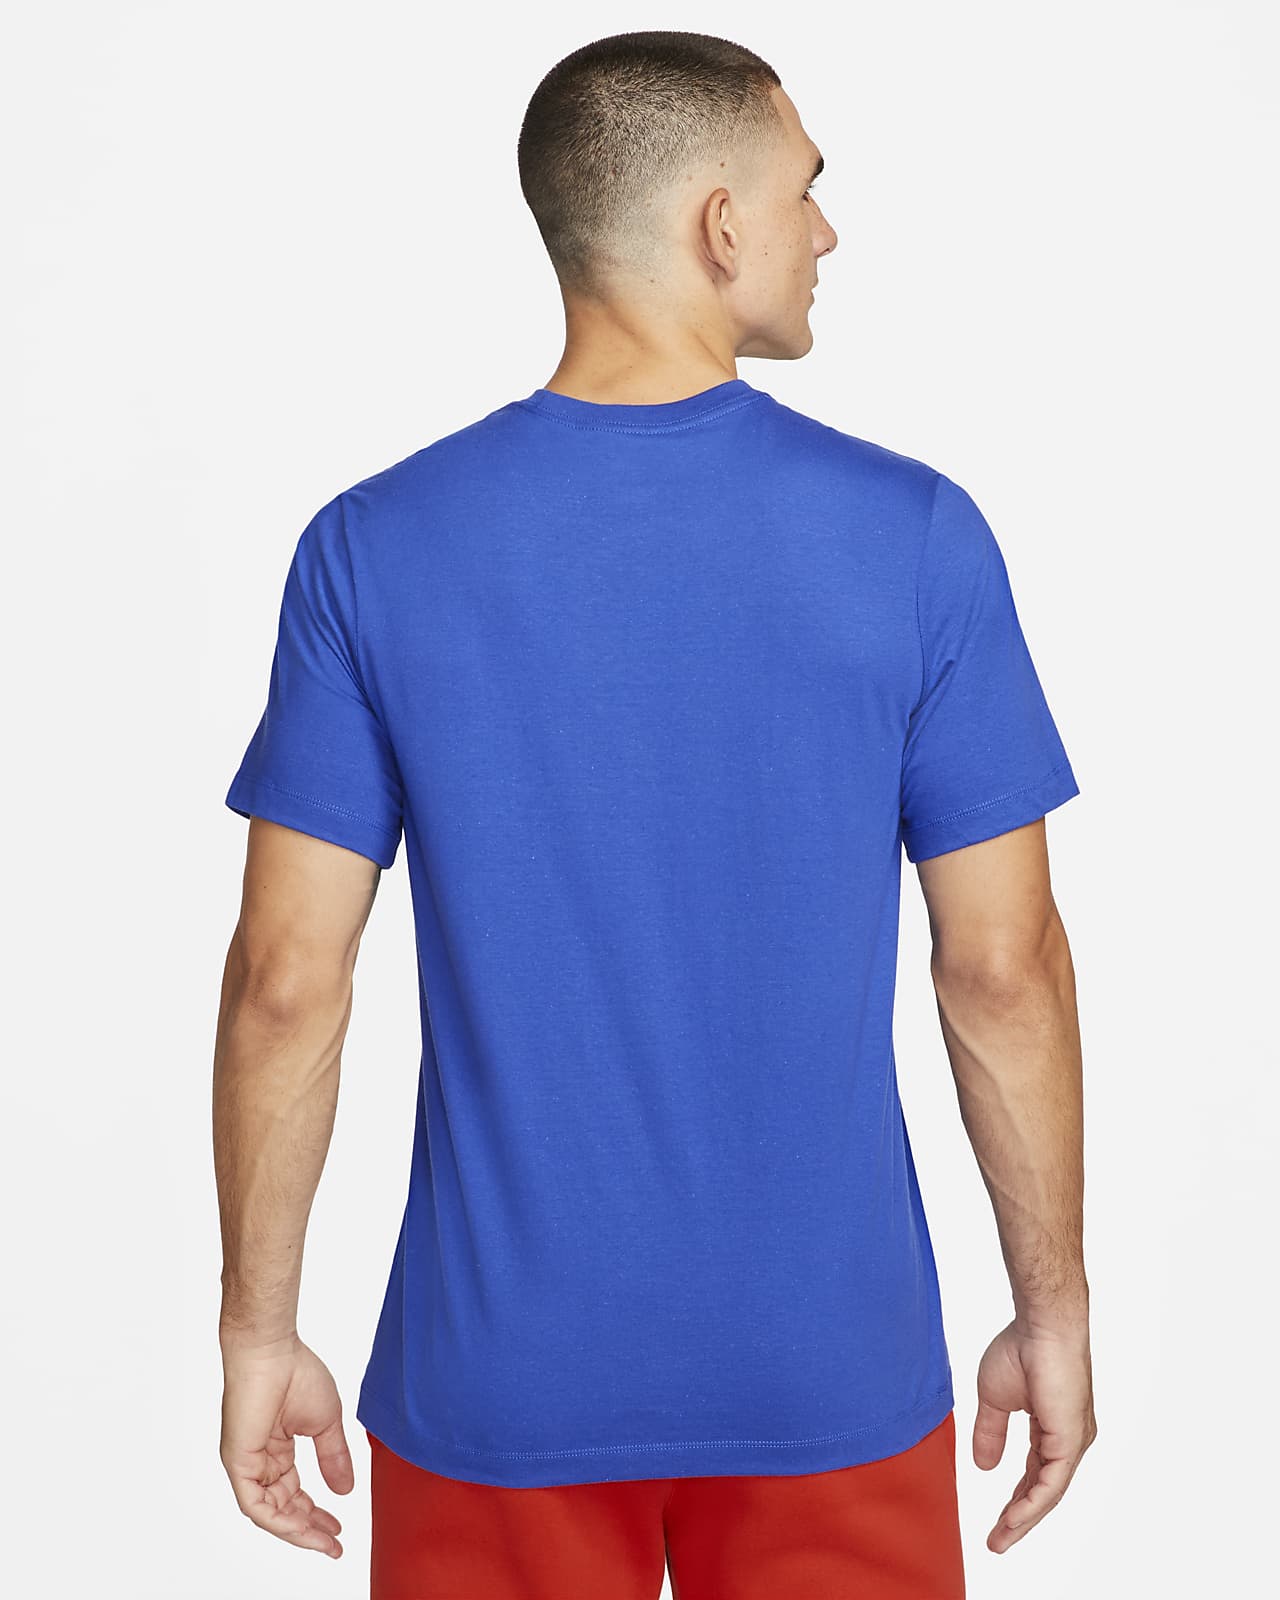 U.S. Swoosh Men's Nike T-Shirt